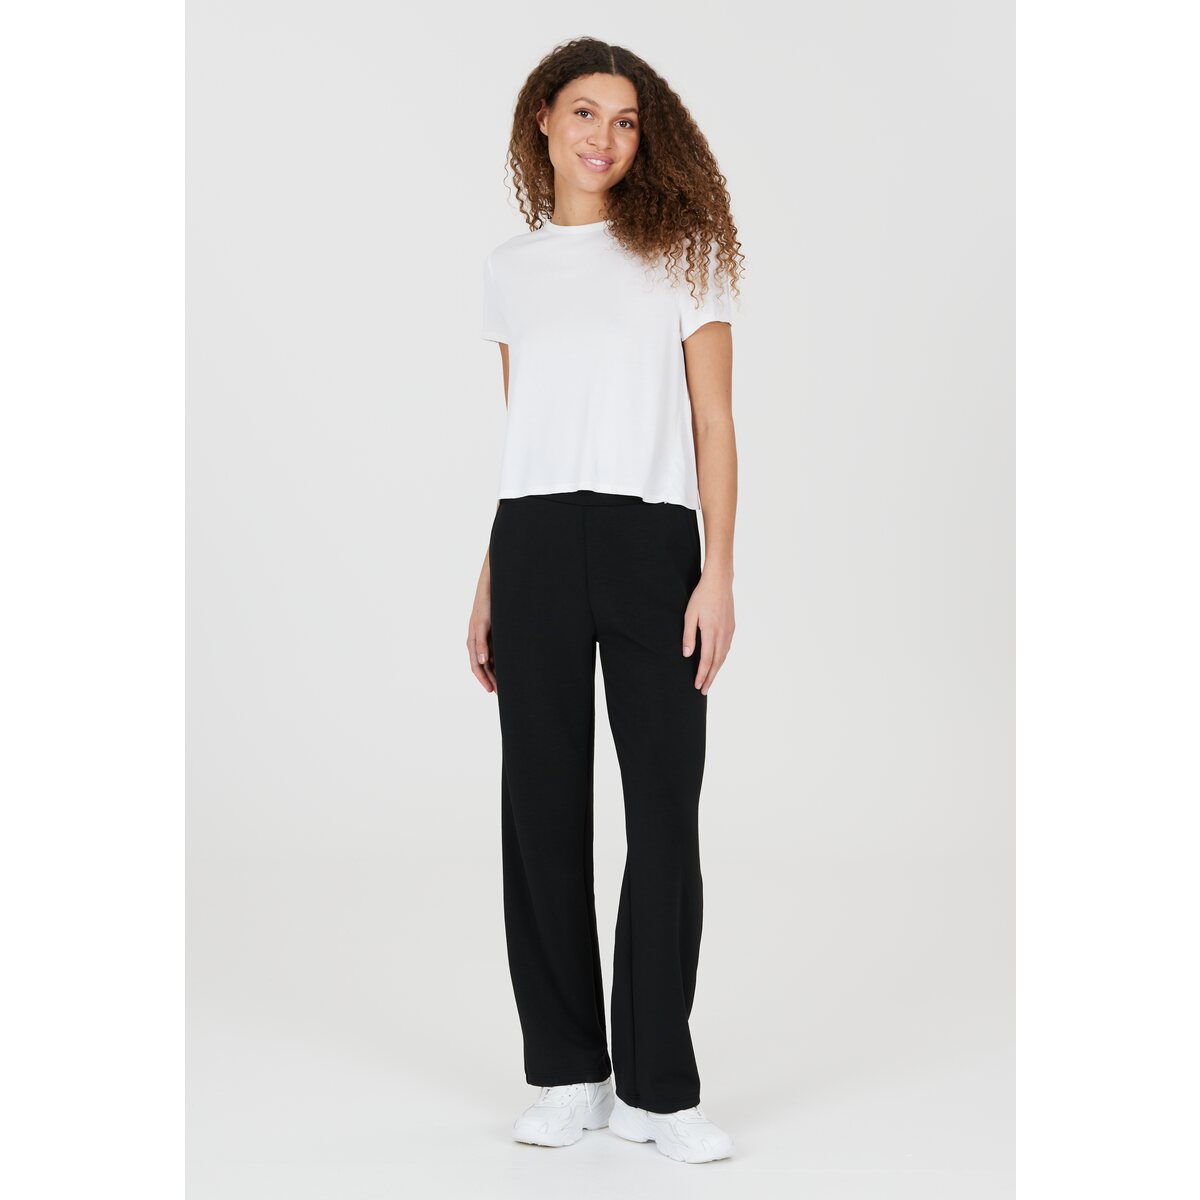 Athlecia Jacey Womenswear Regular Pants - Black 4 Shaws Department Stores